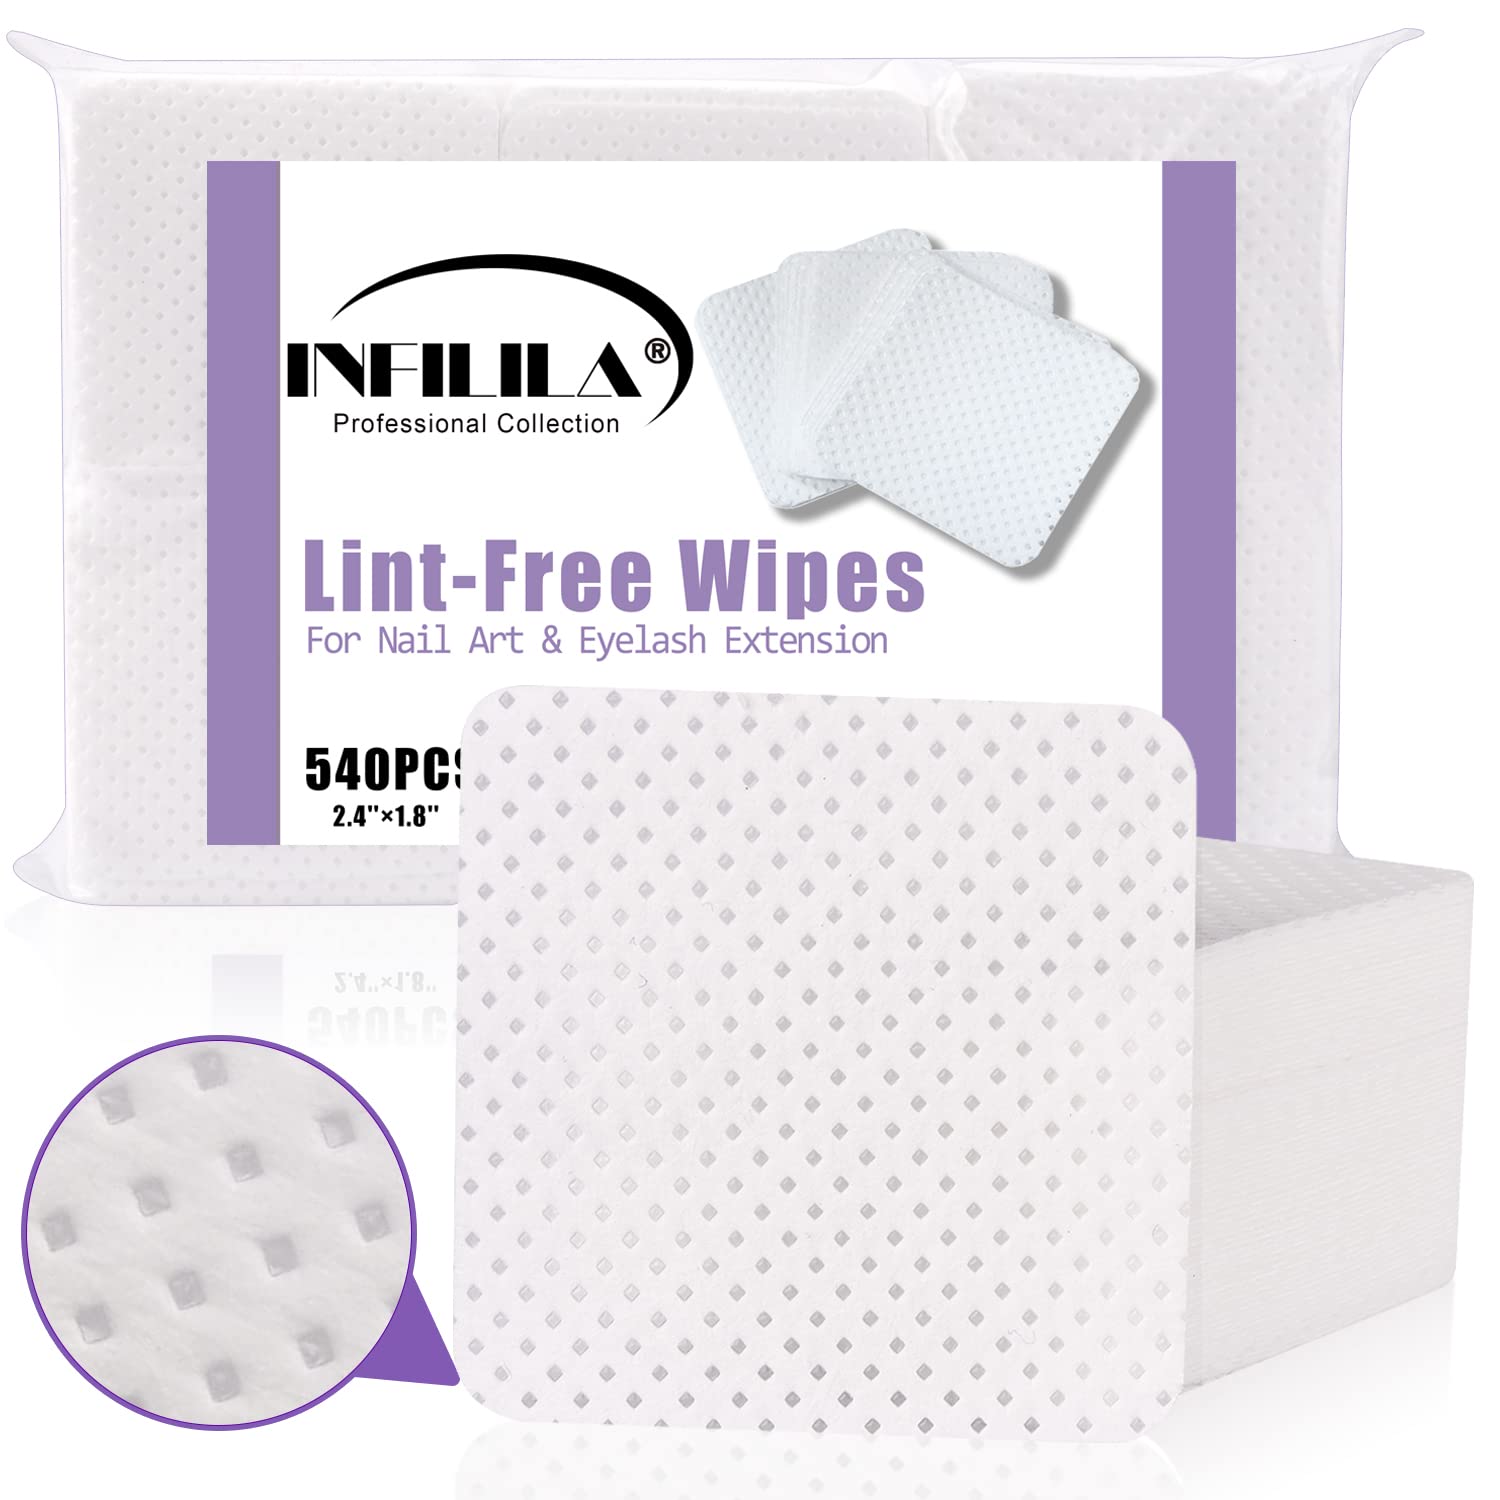 Lint free wipes